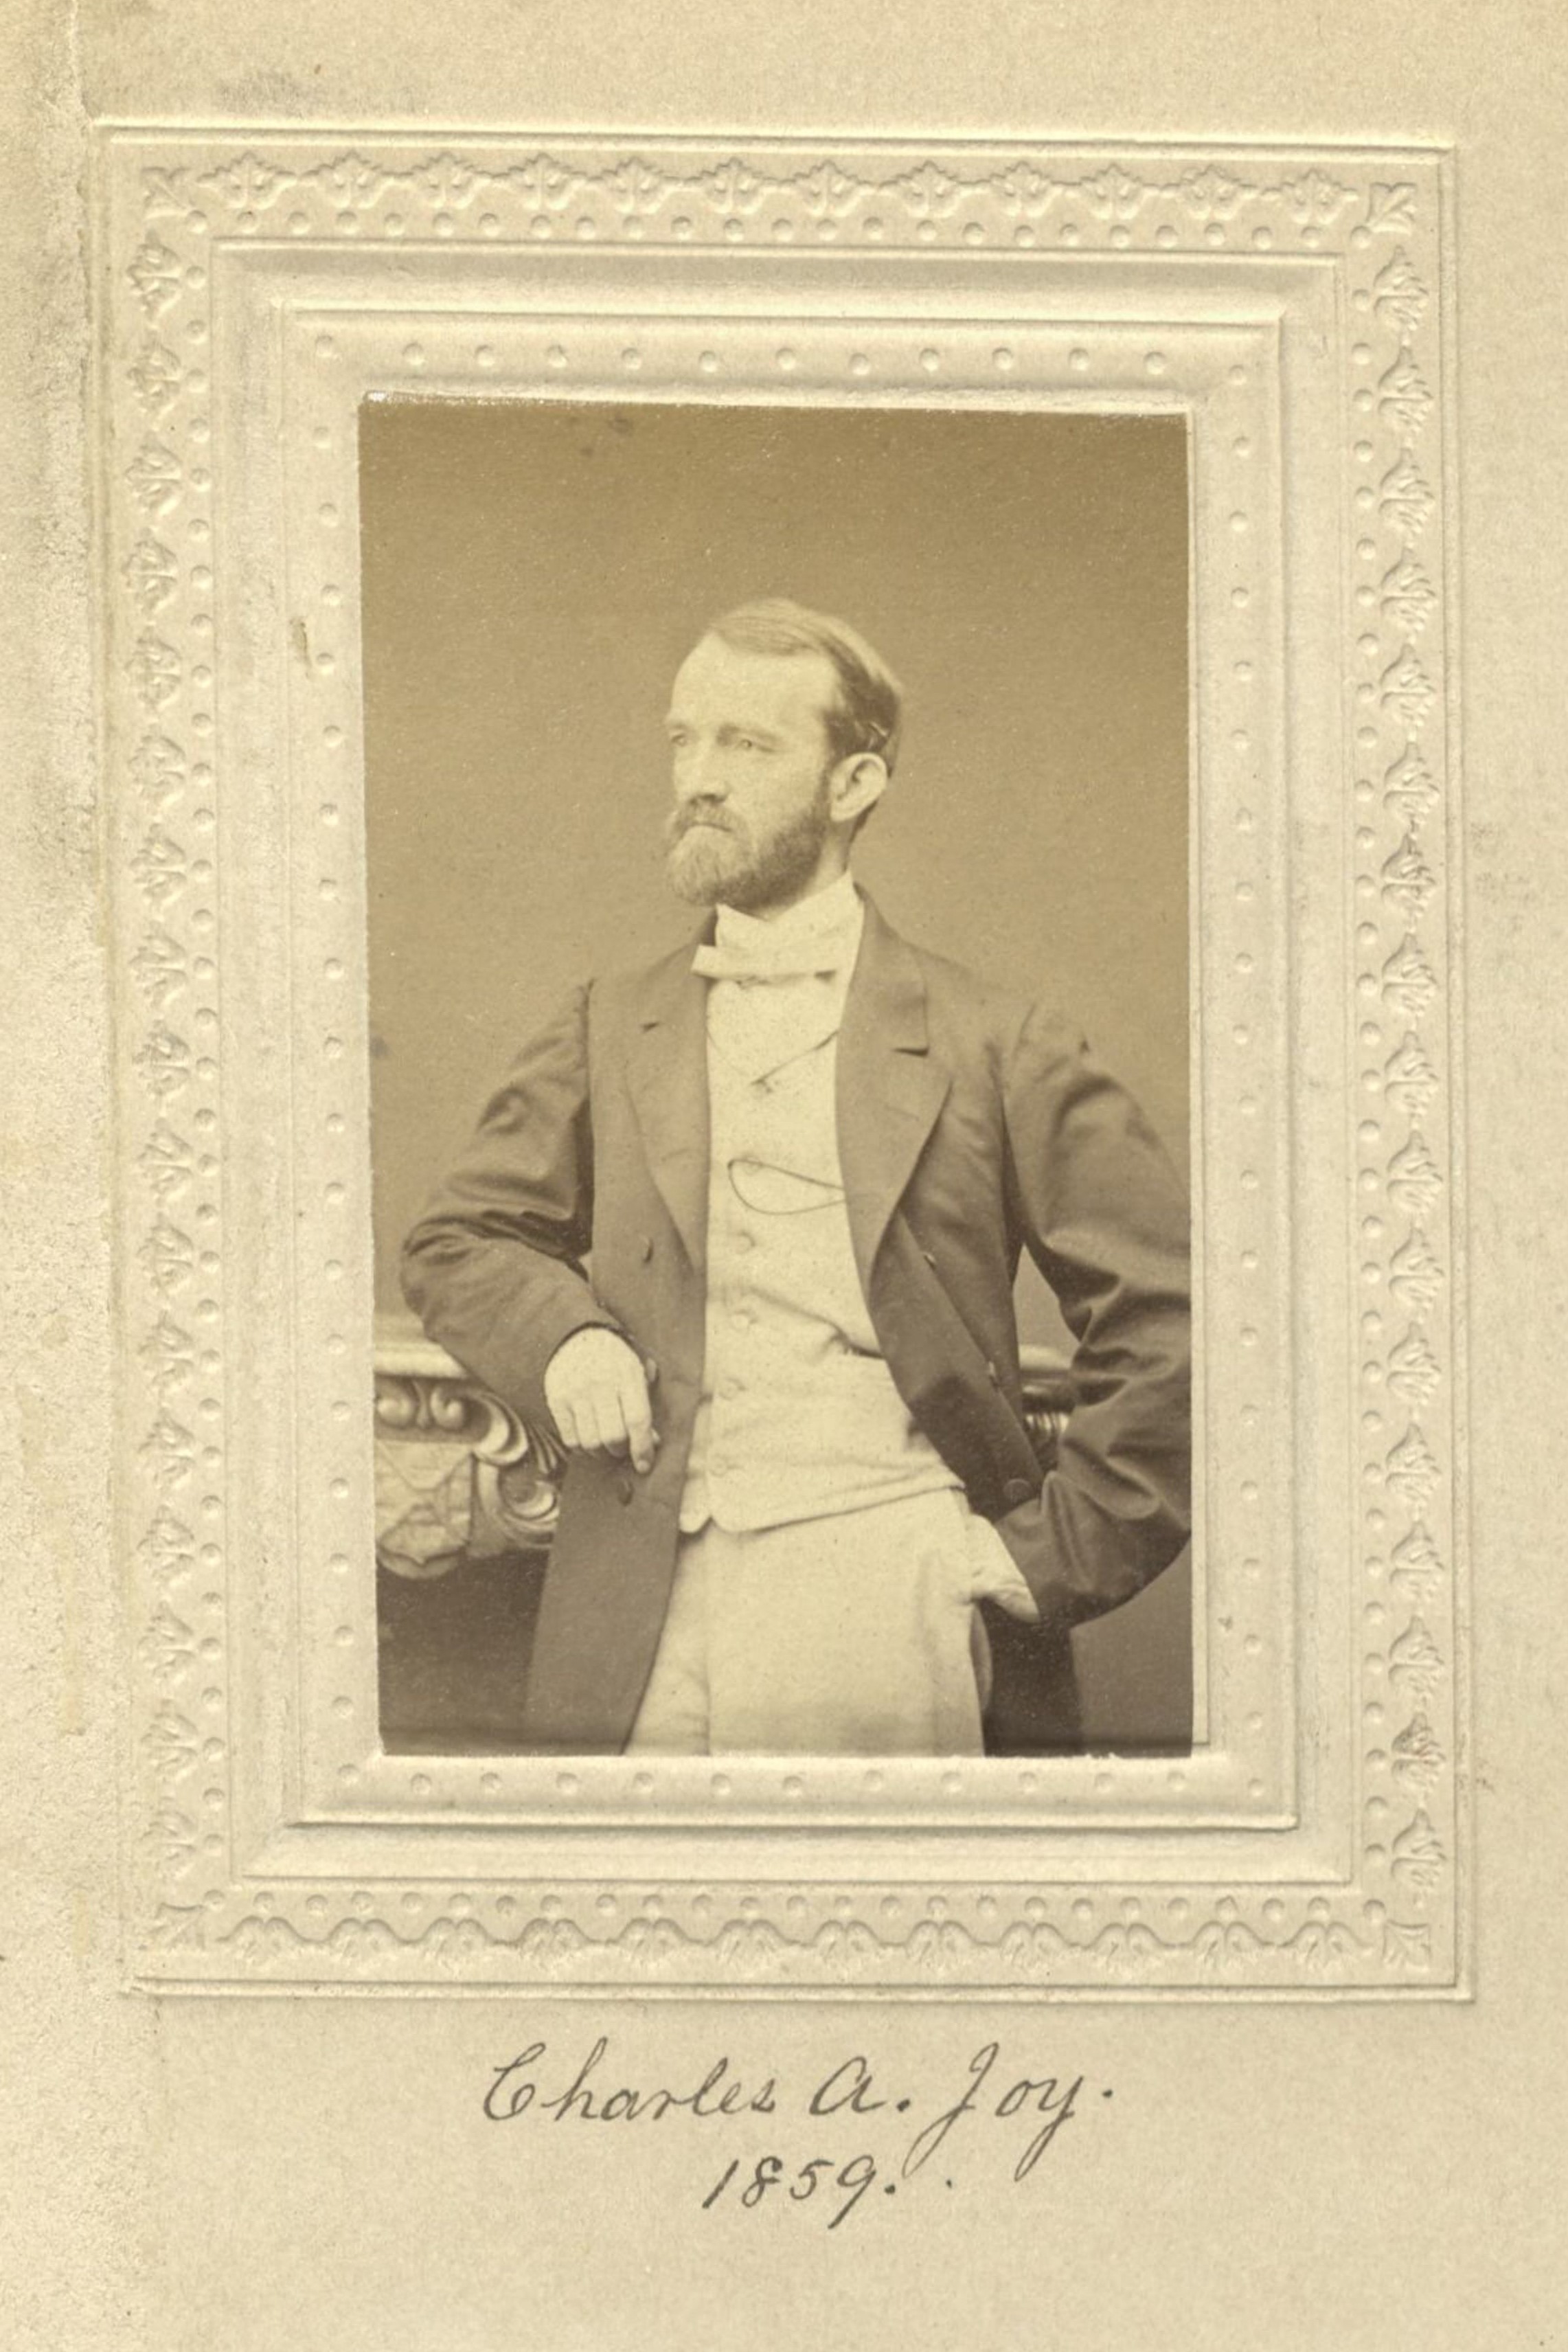 Member portrait of Charles A. Joy